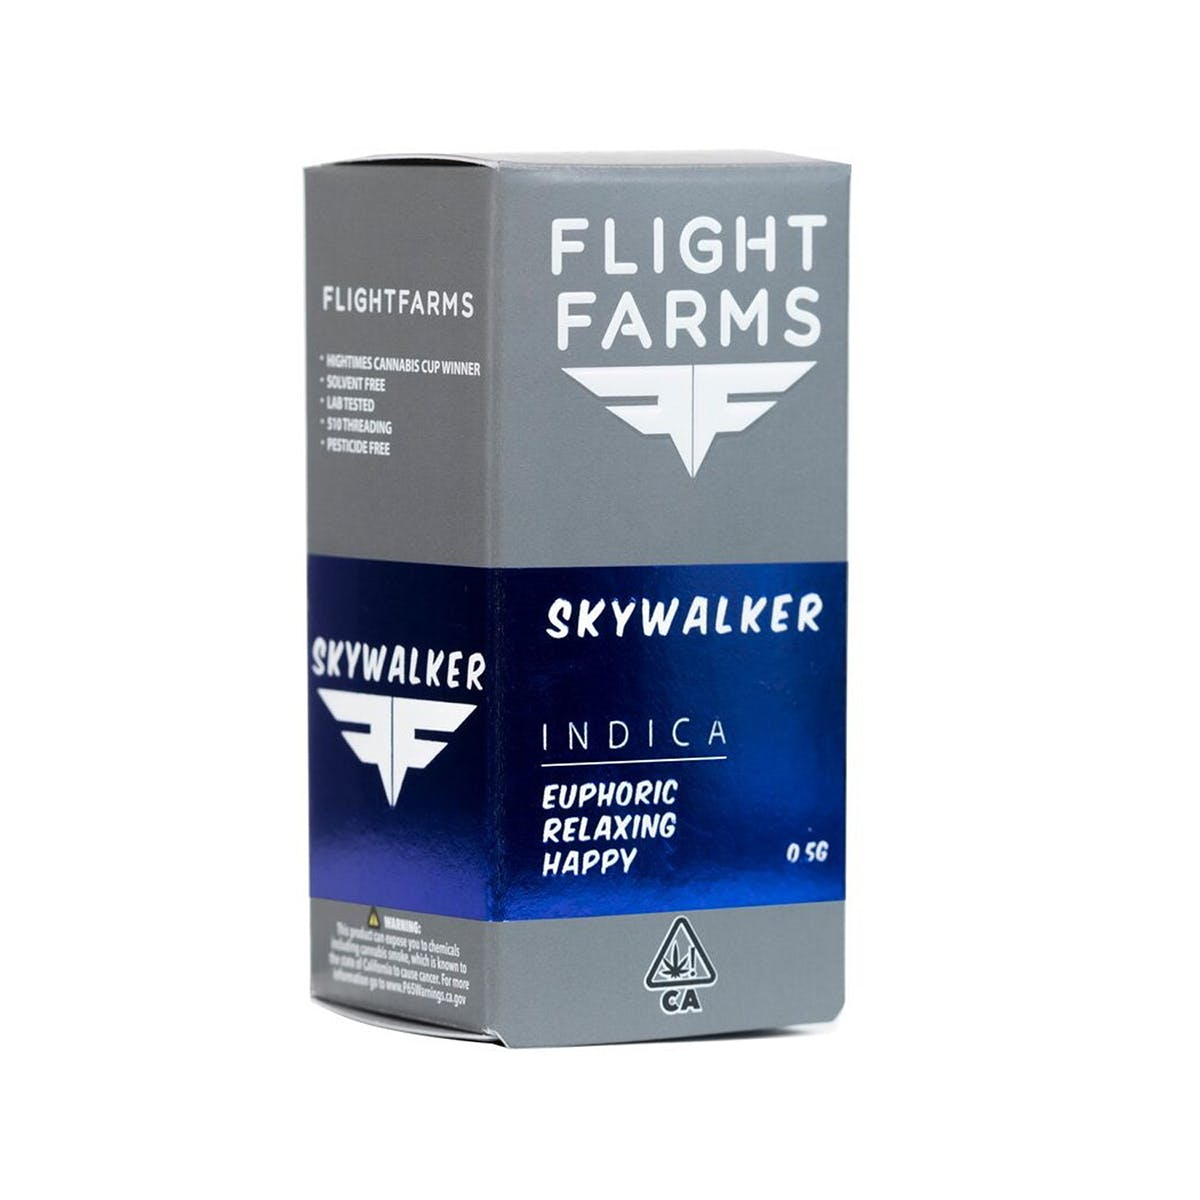 FLIGHT FARMS F9 Cartridge - Skywalker OG 500mg